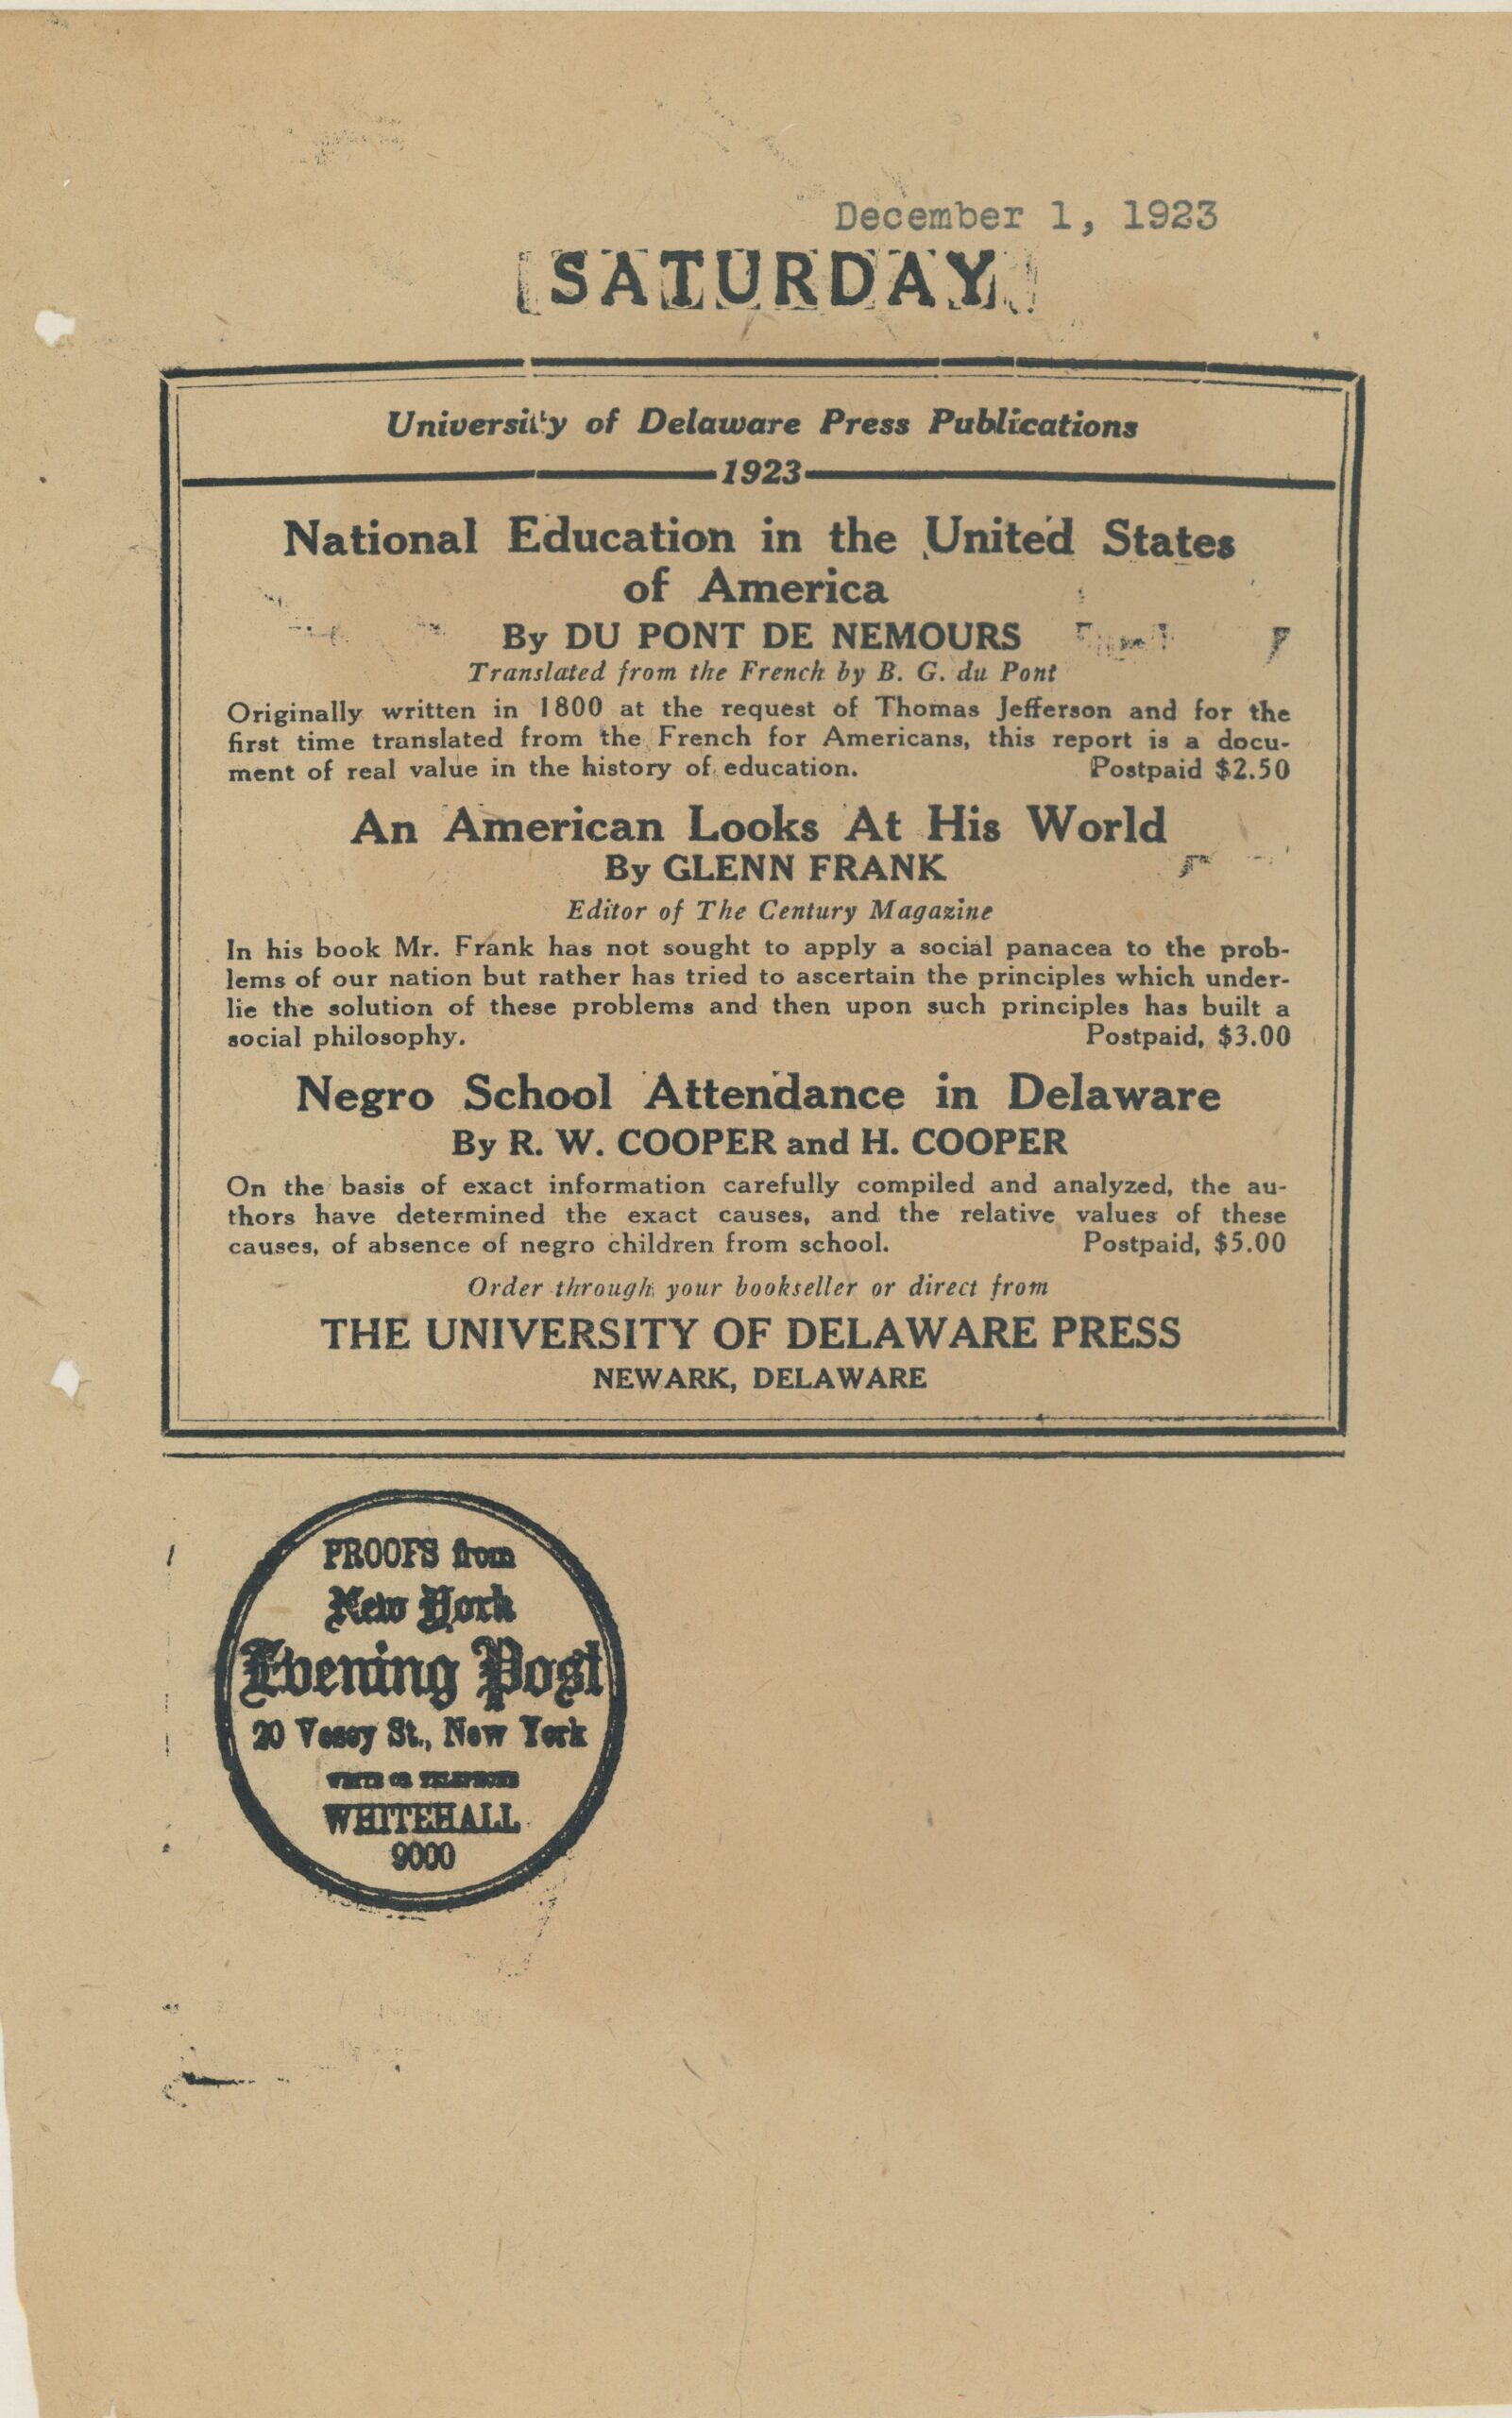 University of Delaware Press Ad December 1, 1923